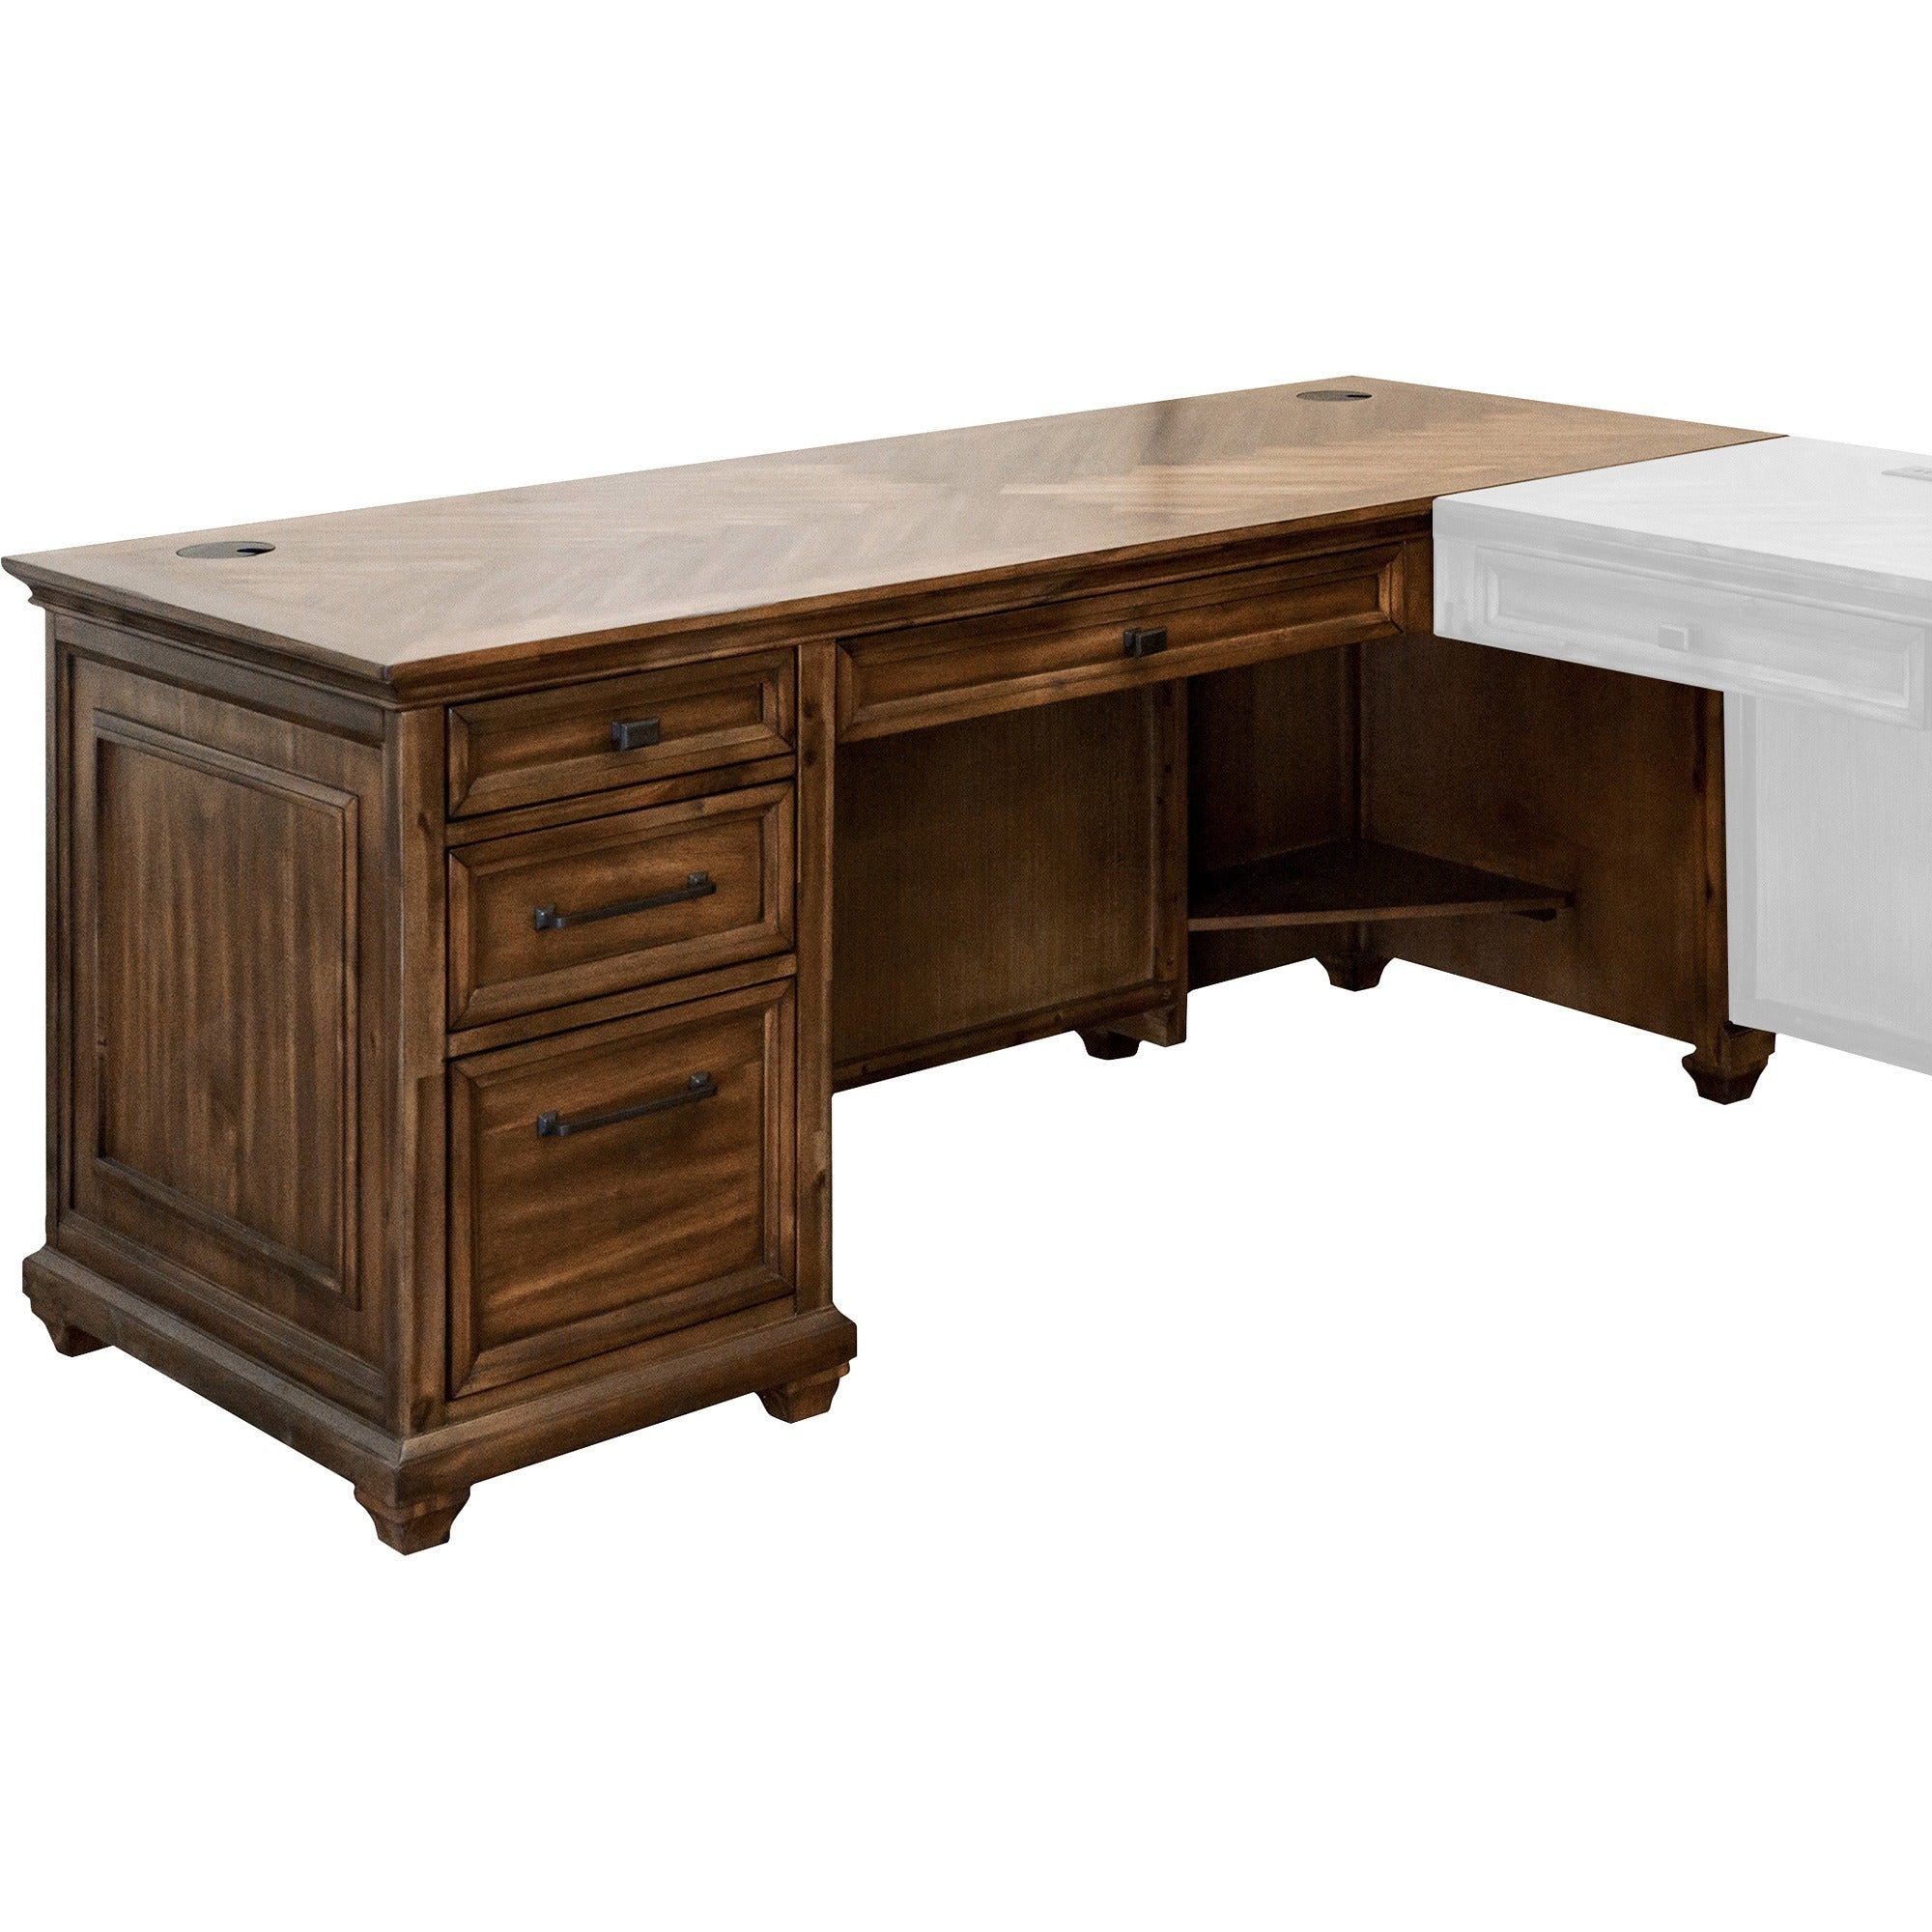 martin-porter-desk-with-pedestal-box-1-of-2-68-x-3030-4-x-storage-drawers_mrtimpr684r - 1